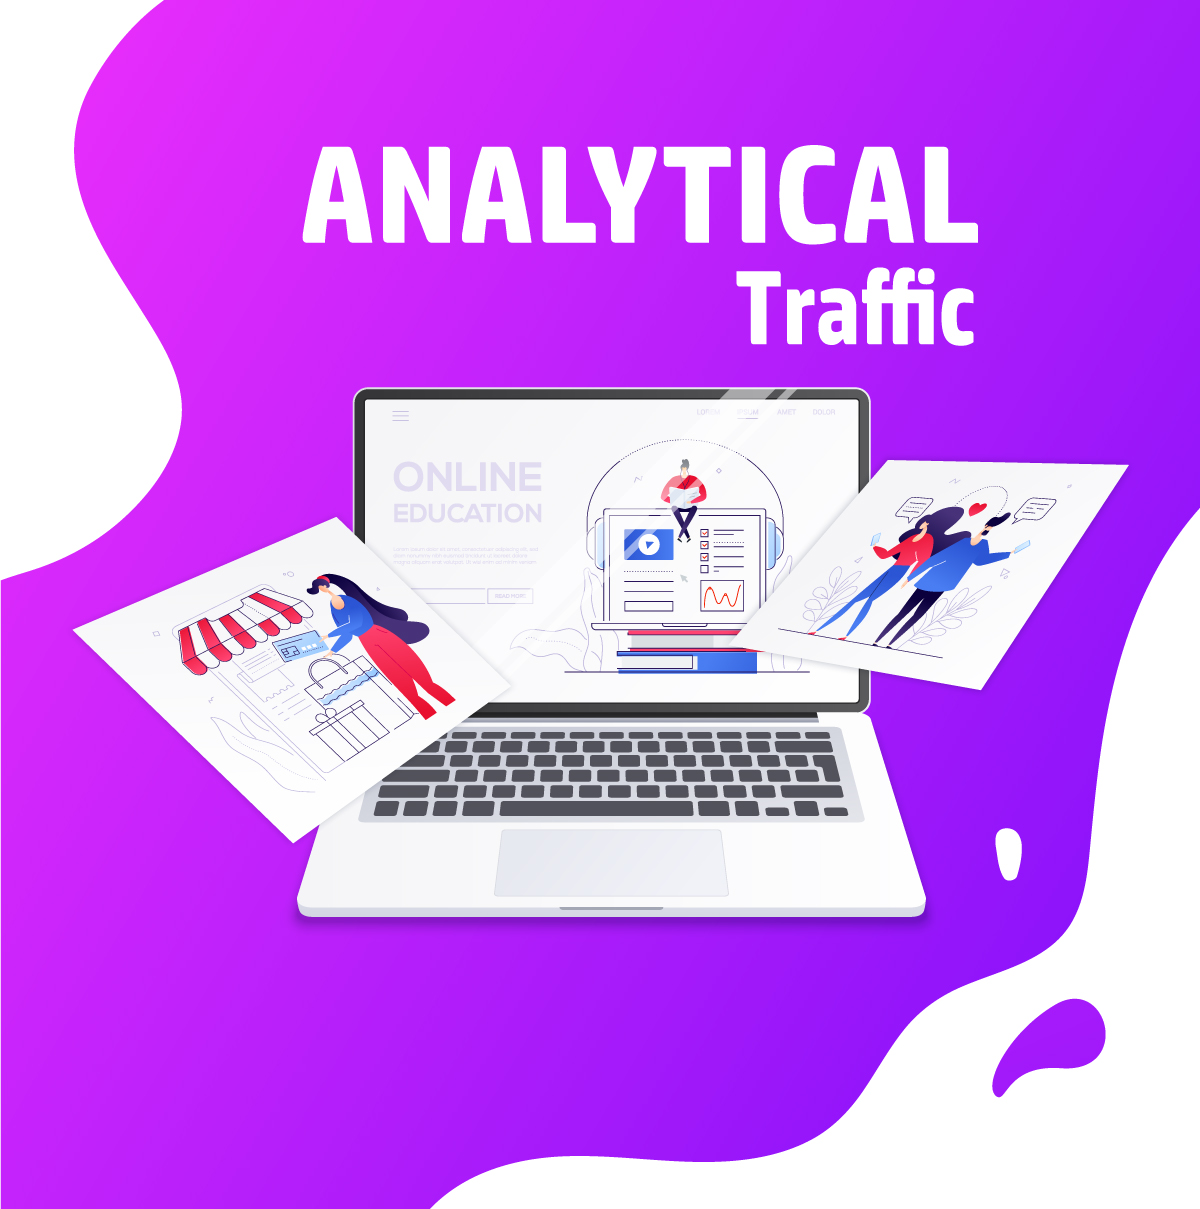 Analytical Traffic